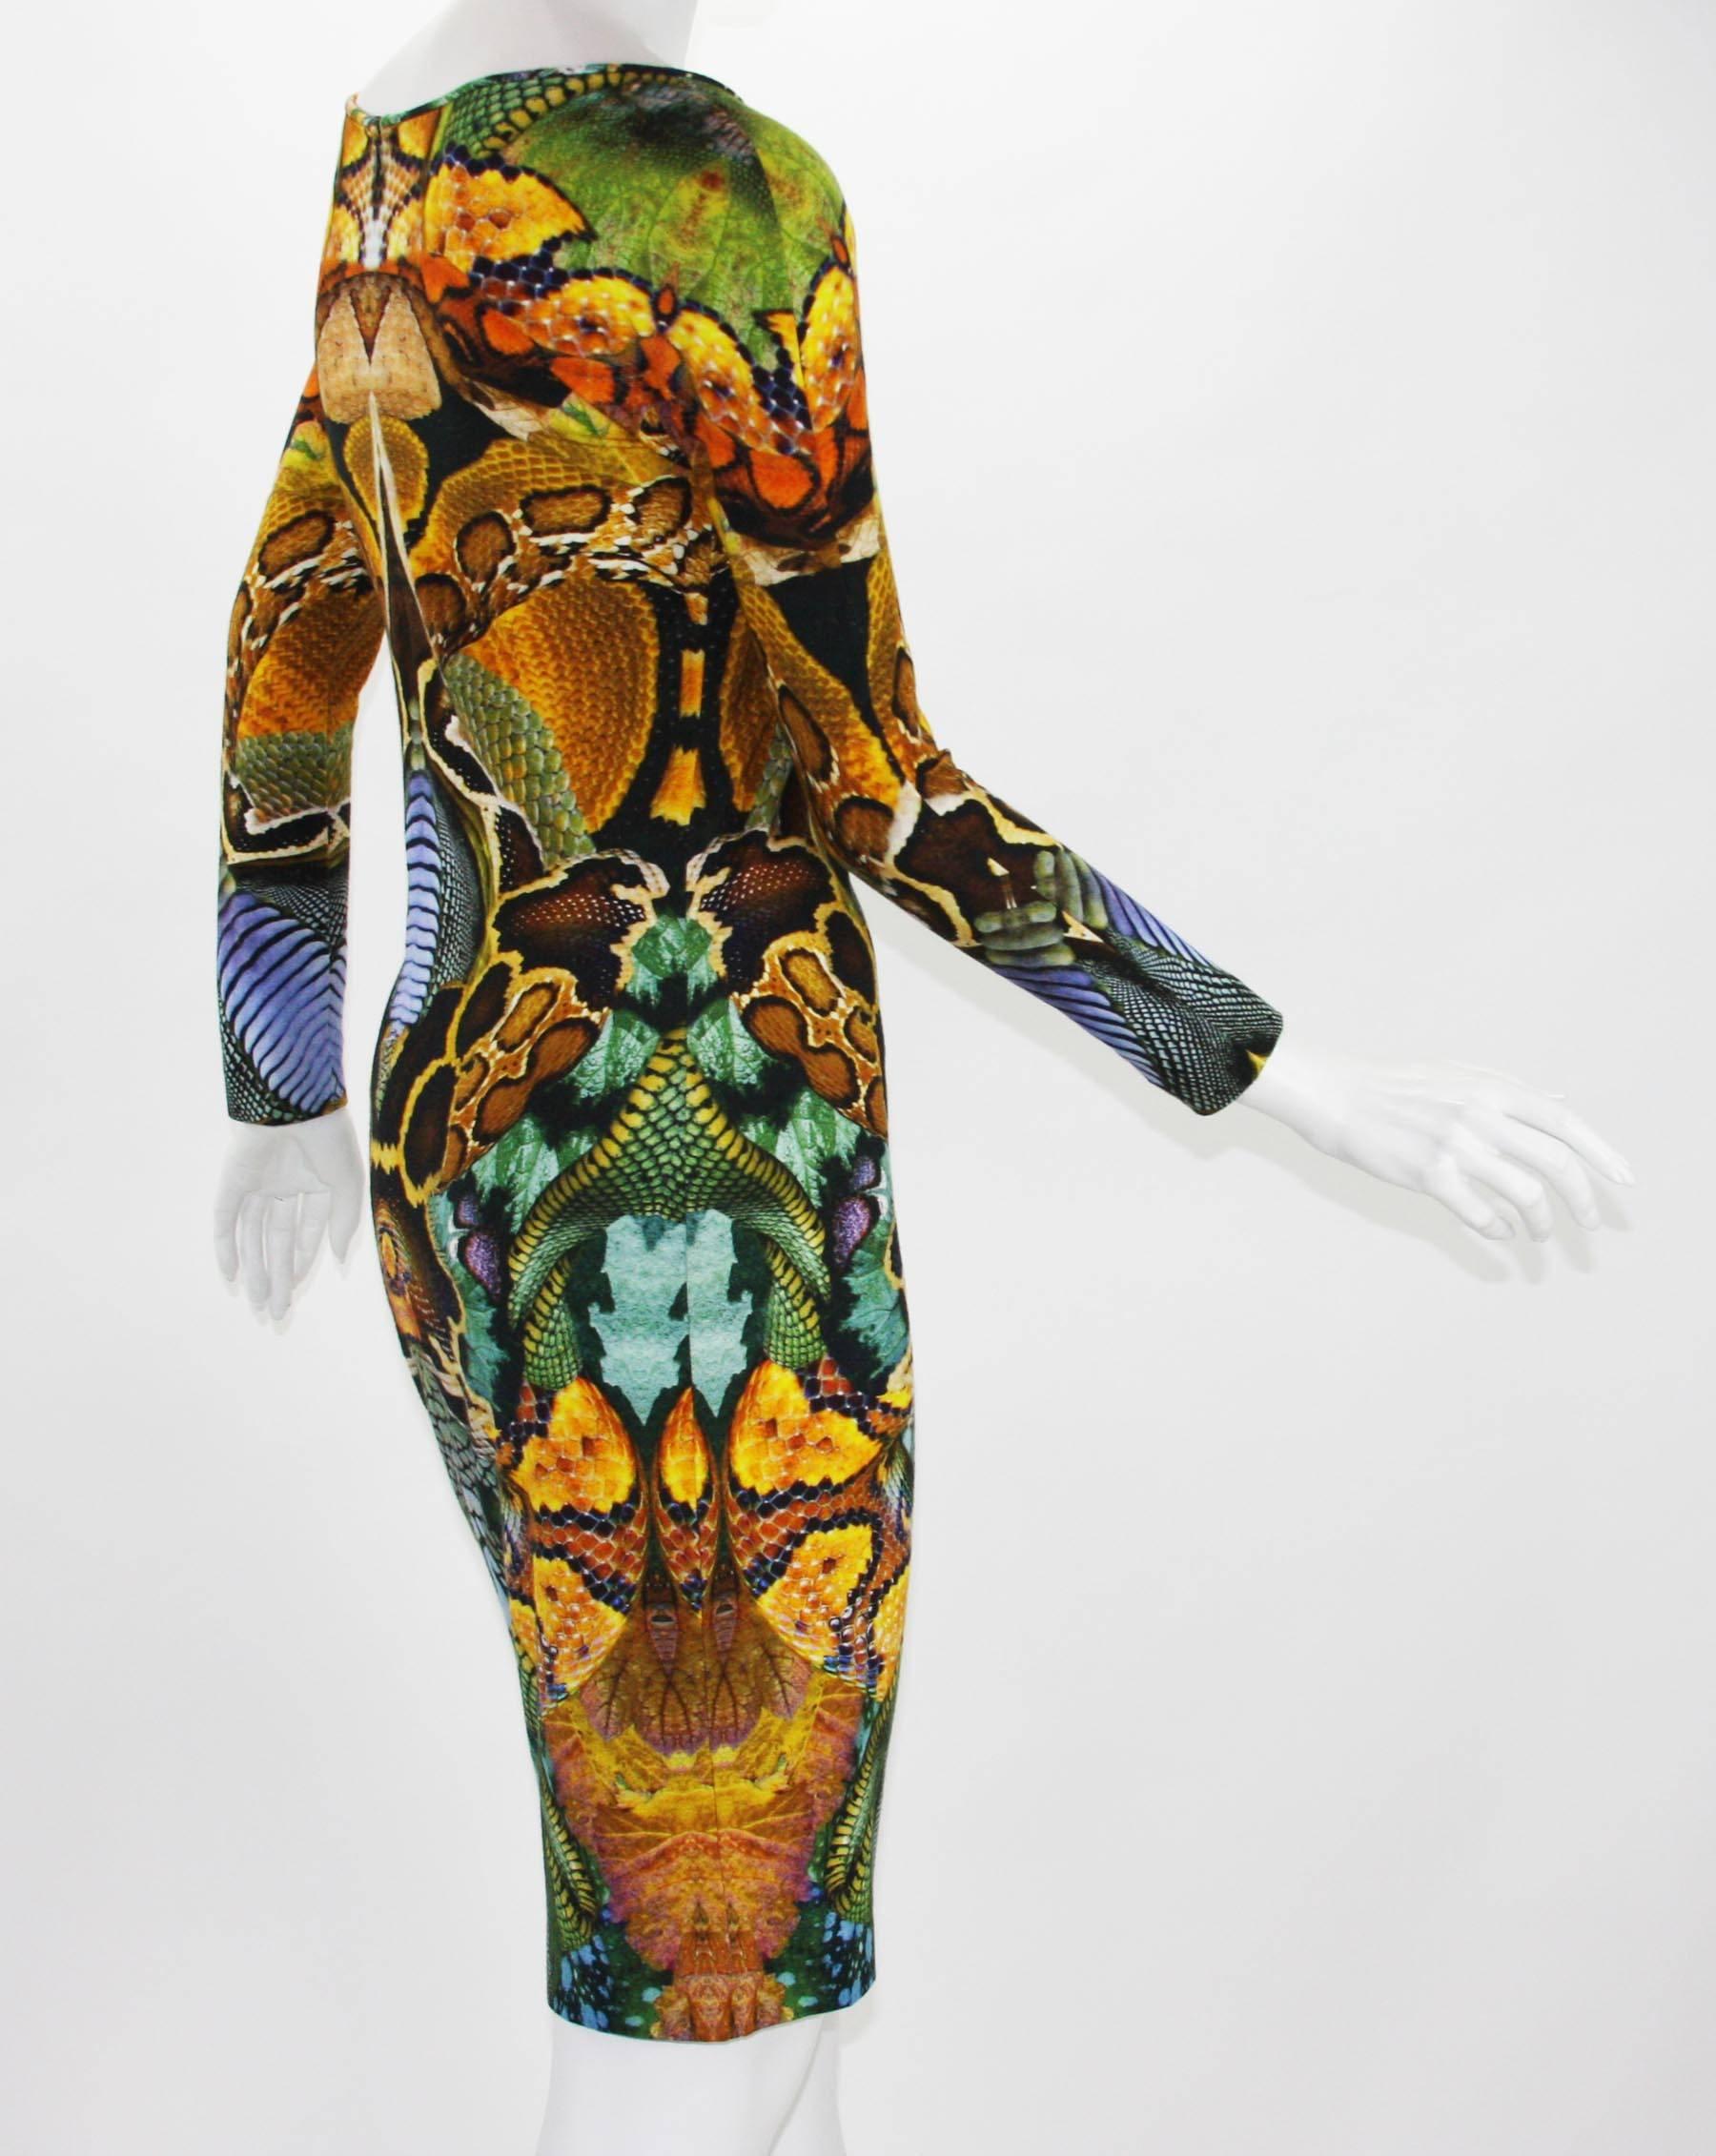 Alexander McQueen - Robe extensible « Plato's Atlantis » collection S/S 2010 - Taille 42 US 6 Pour femmes en vente